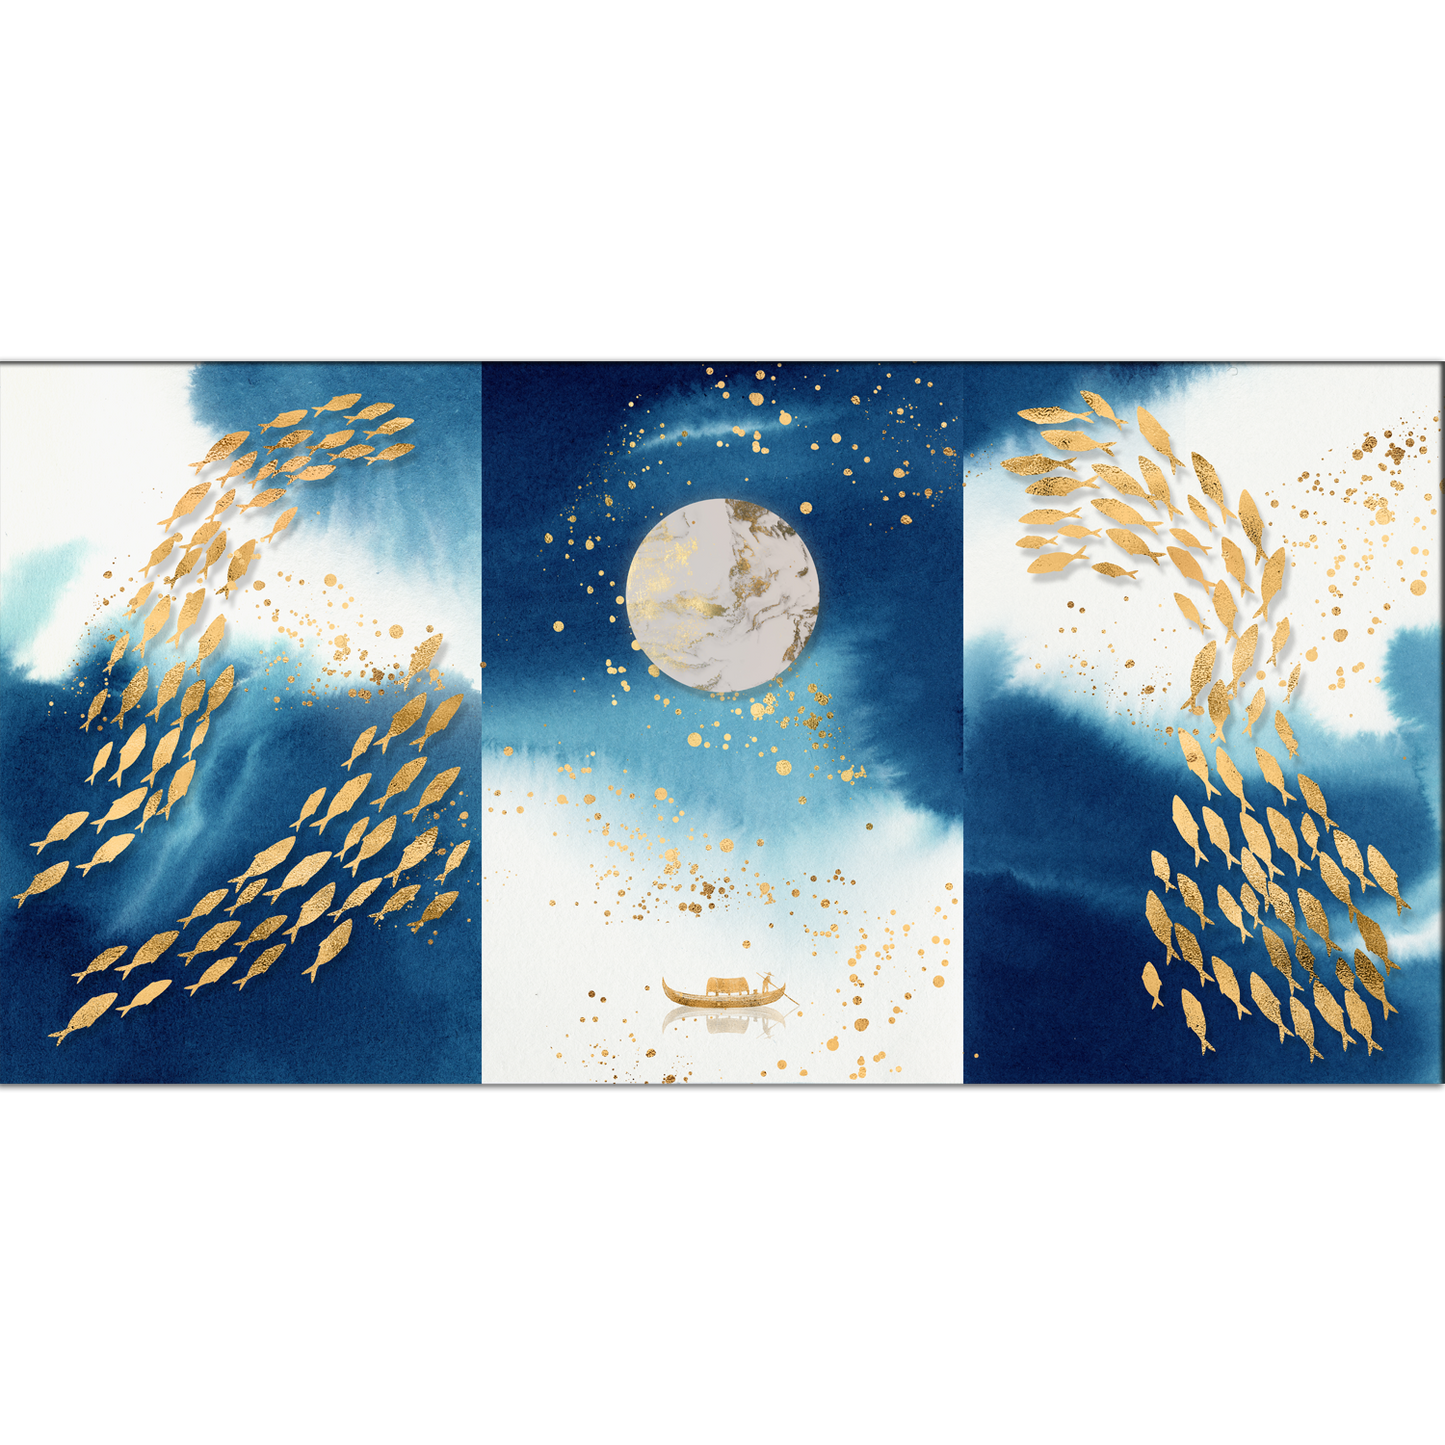 Fish Swimming, Moon and Boat Canvas Print Wall Painting